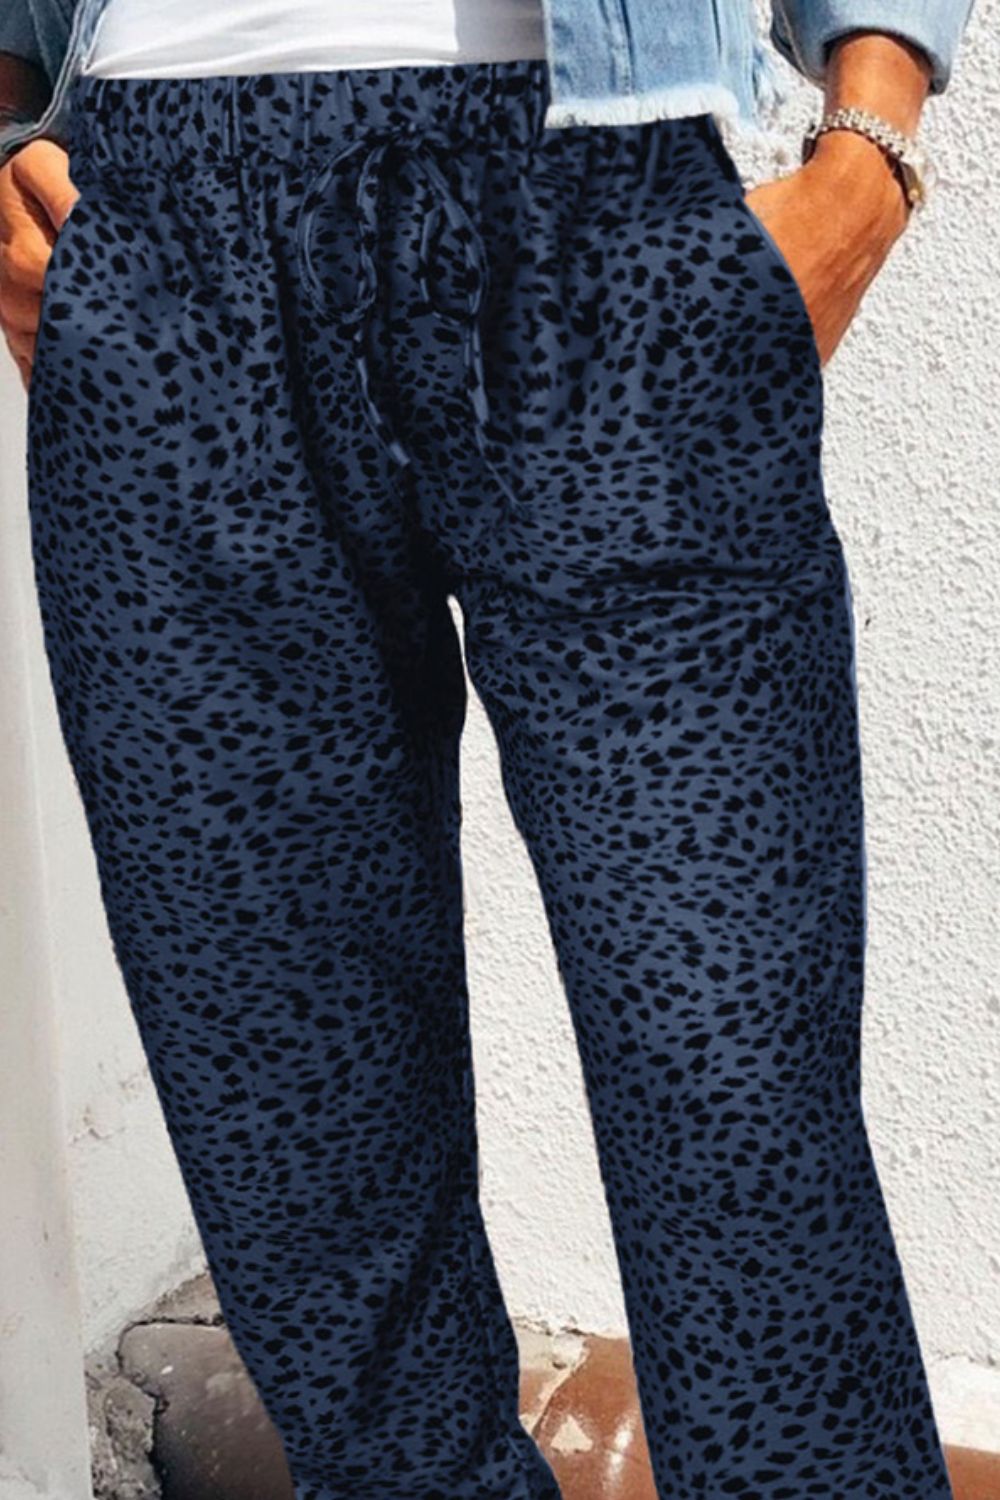 Trendsi Cupid Beauty Supplies Women Pants Leopard Pocketed Long Pants